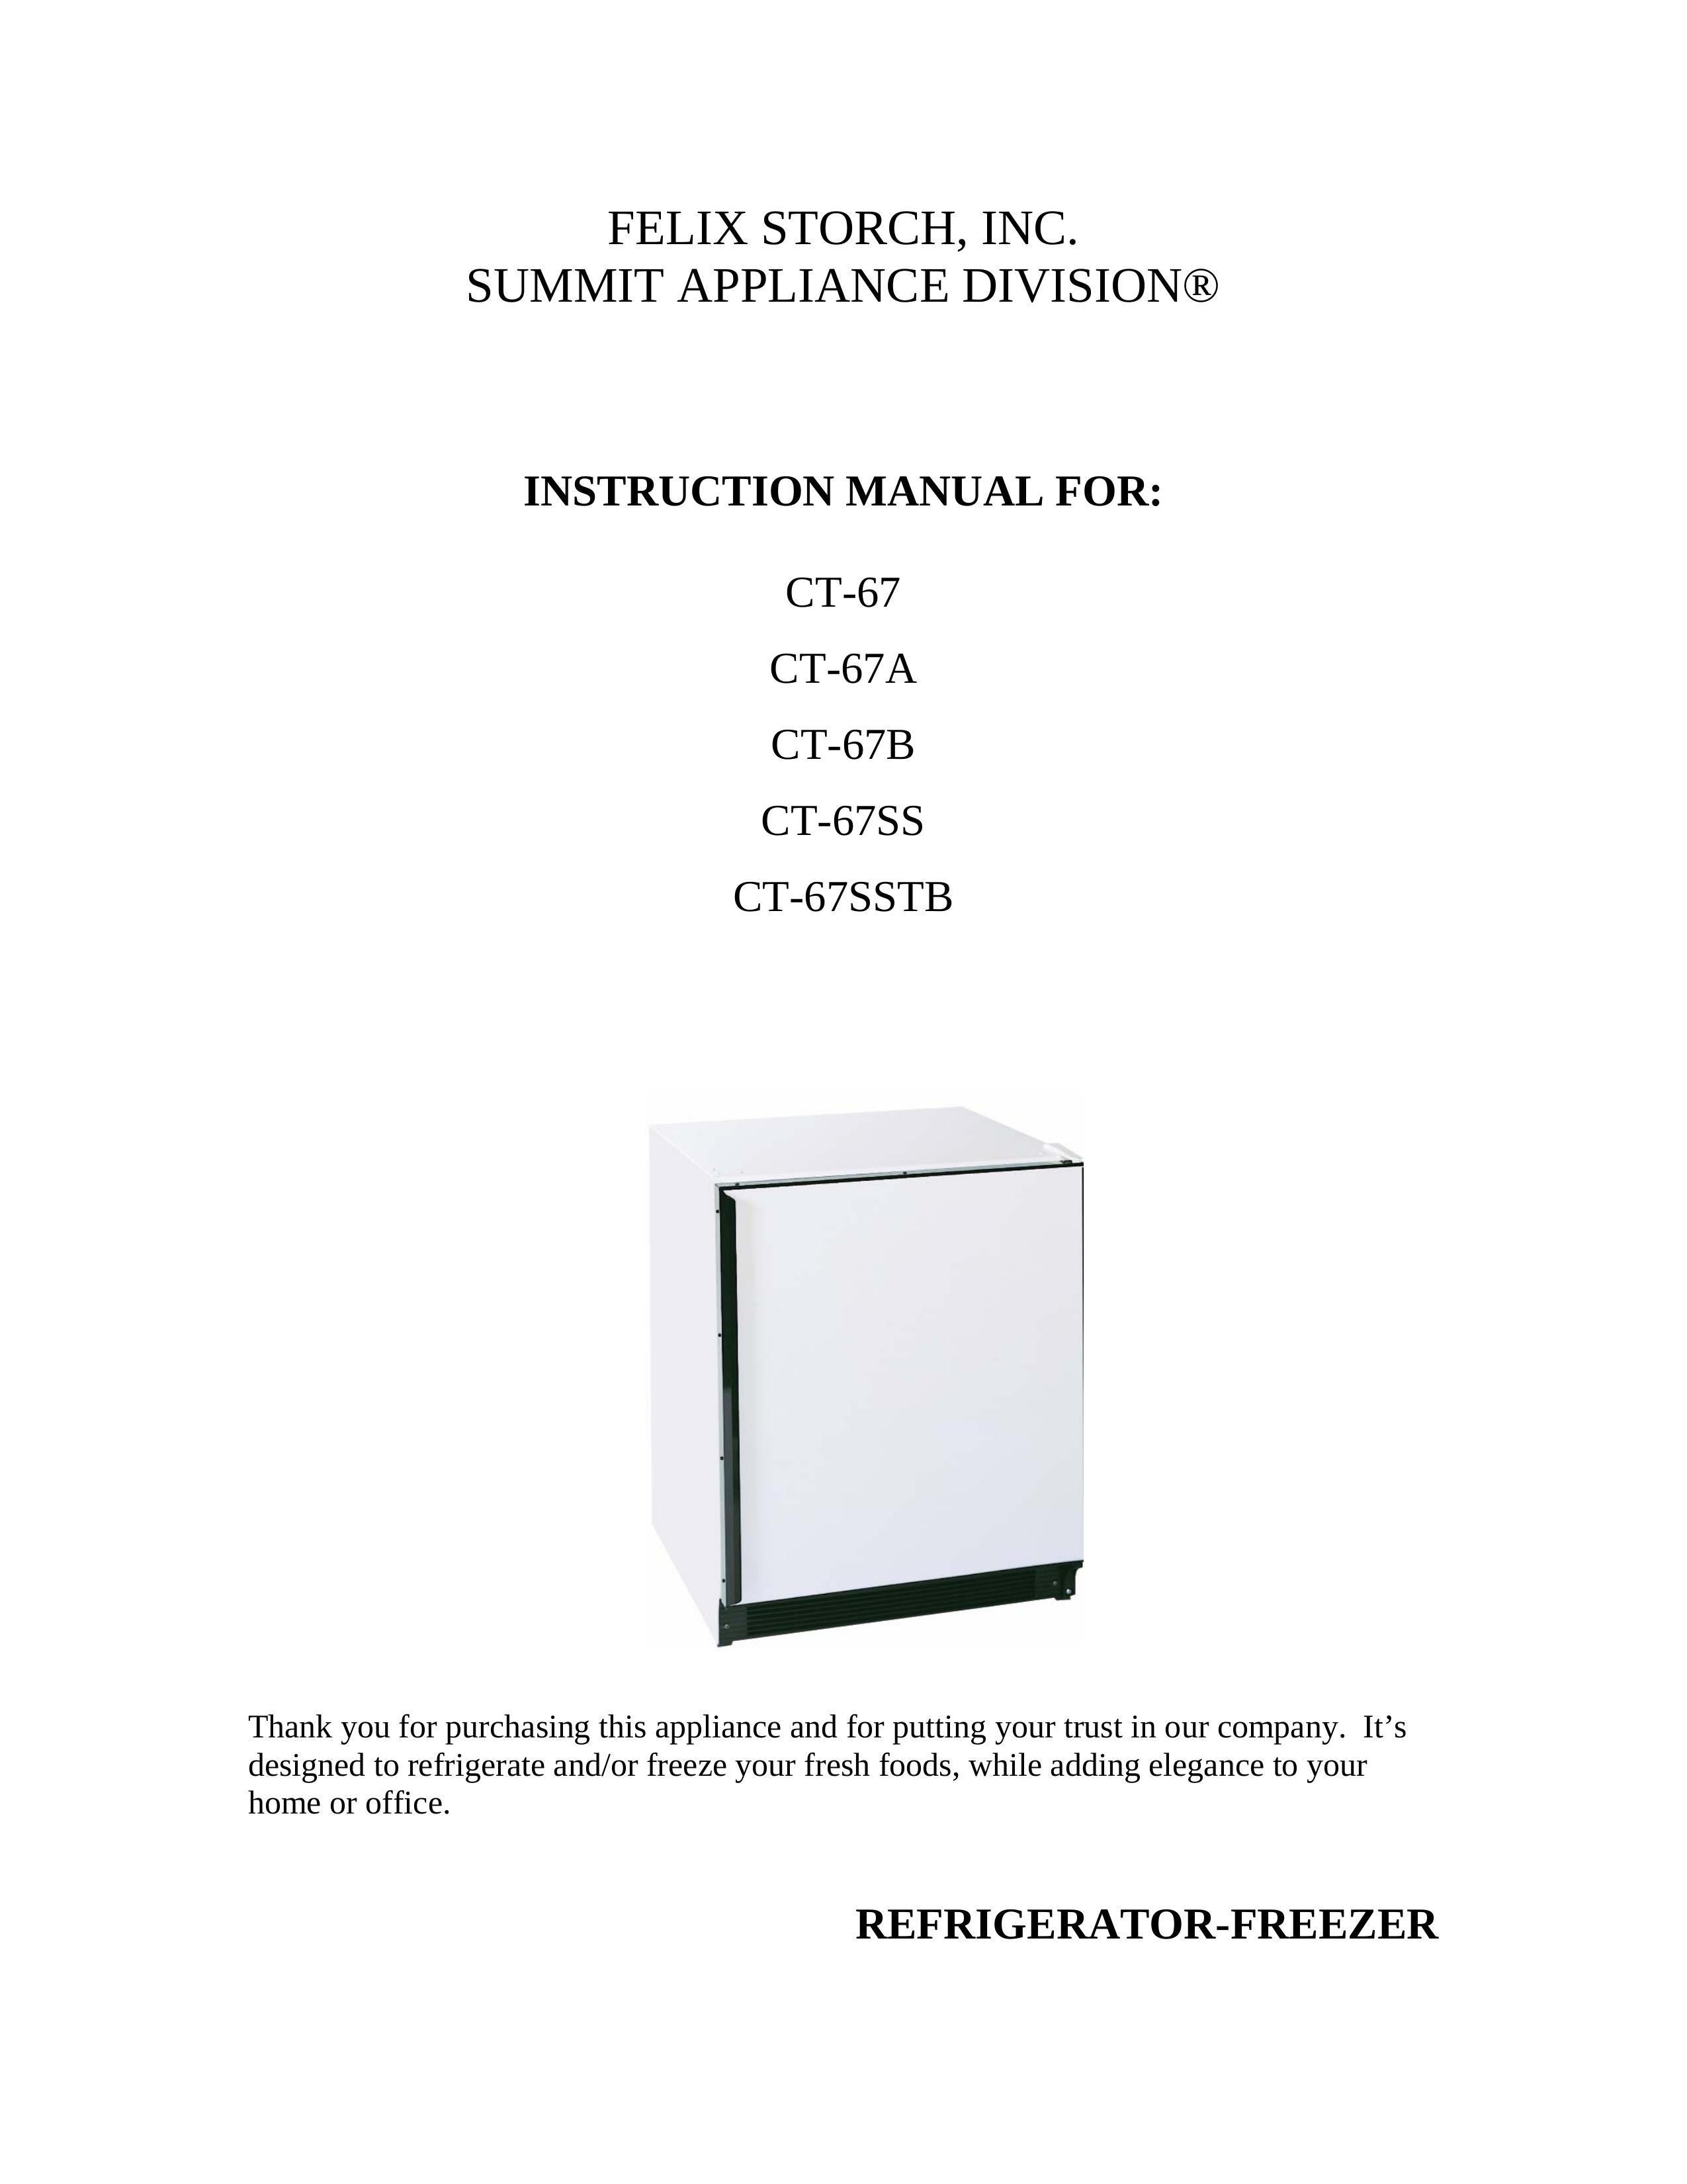 Summit CT-67A Refrigerator User Manual